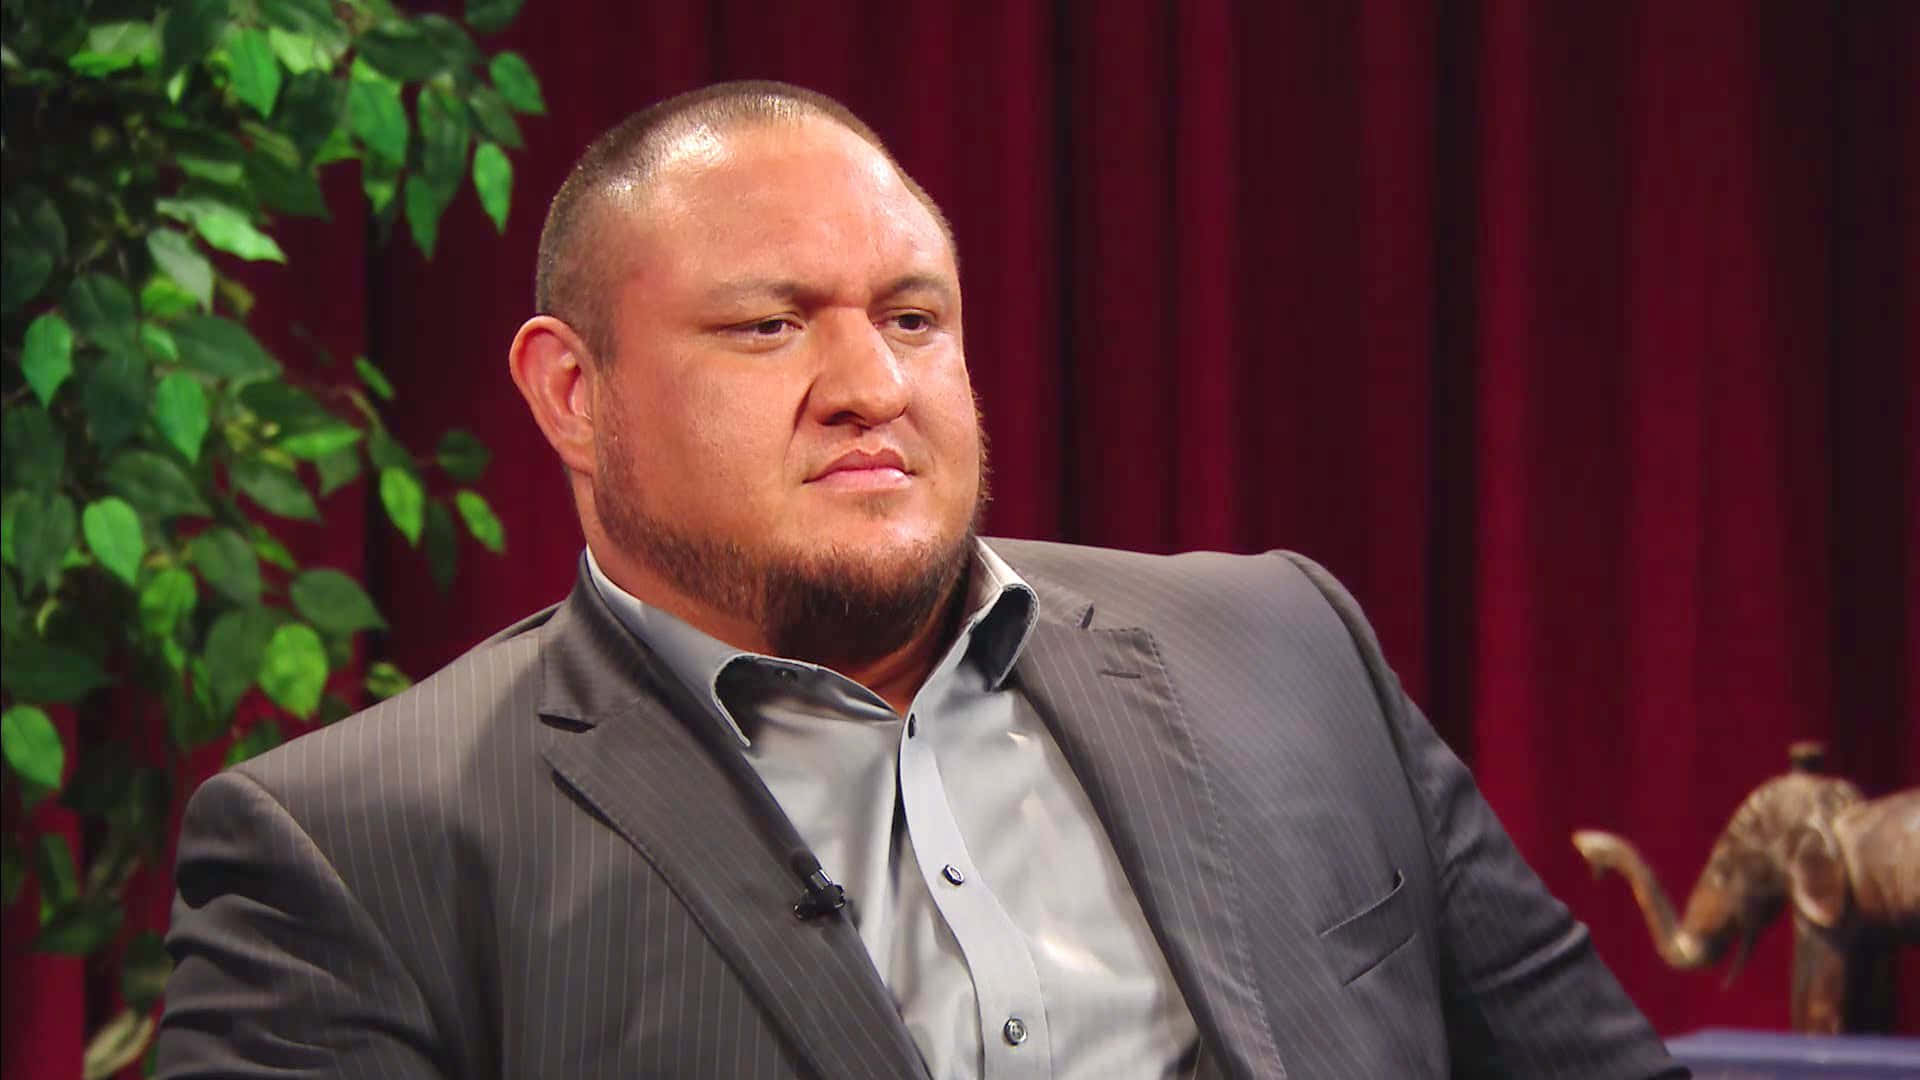 Samoa Joe Wwe Raw Interview 2017 Background